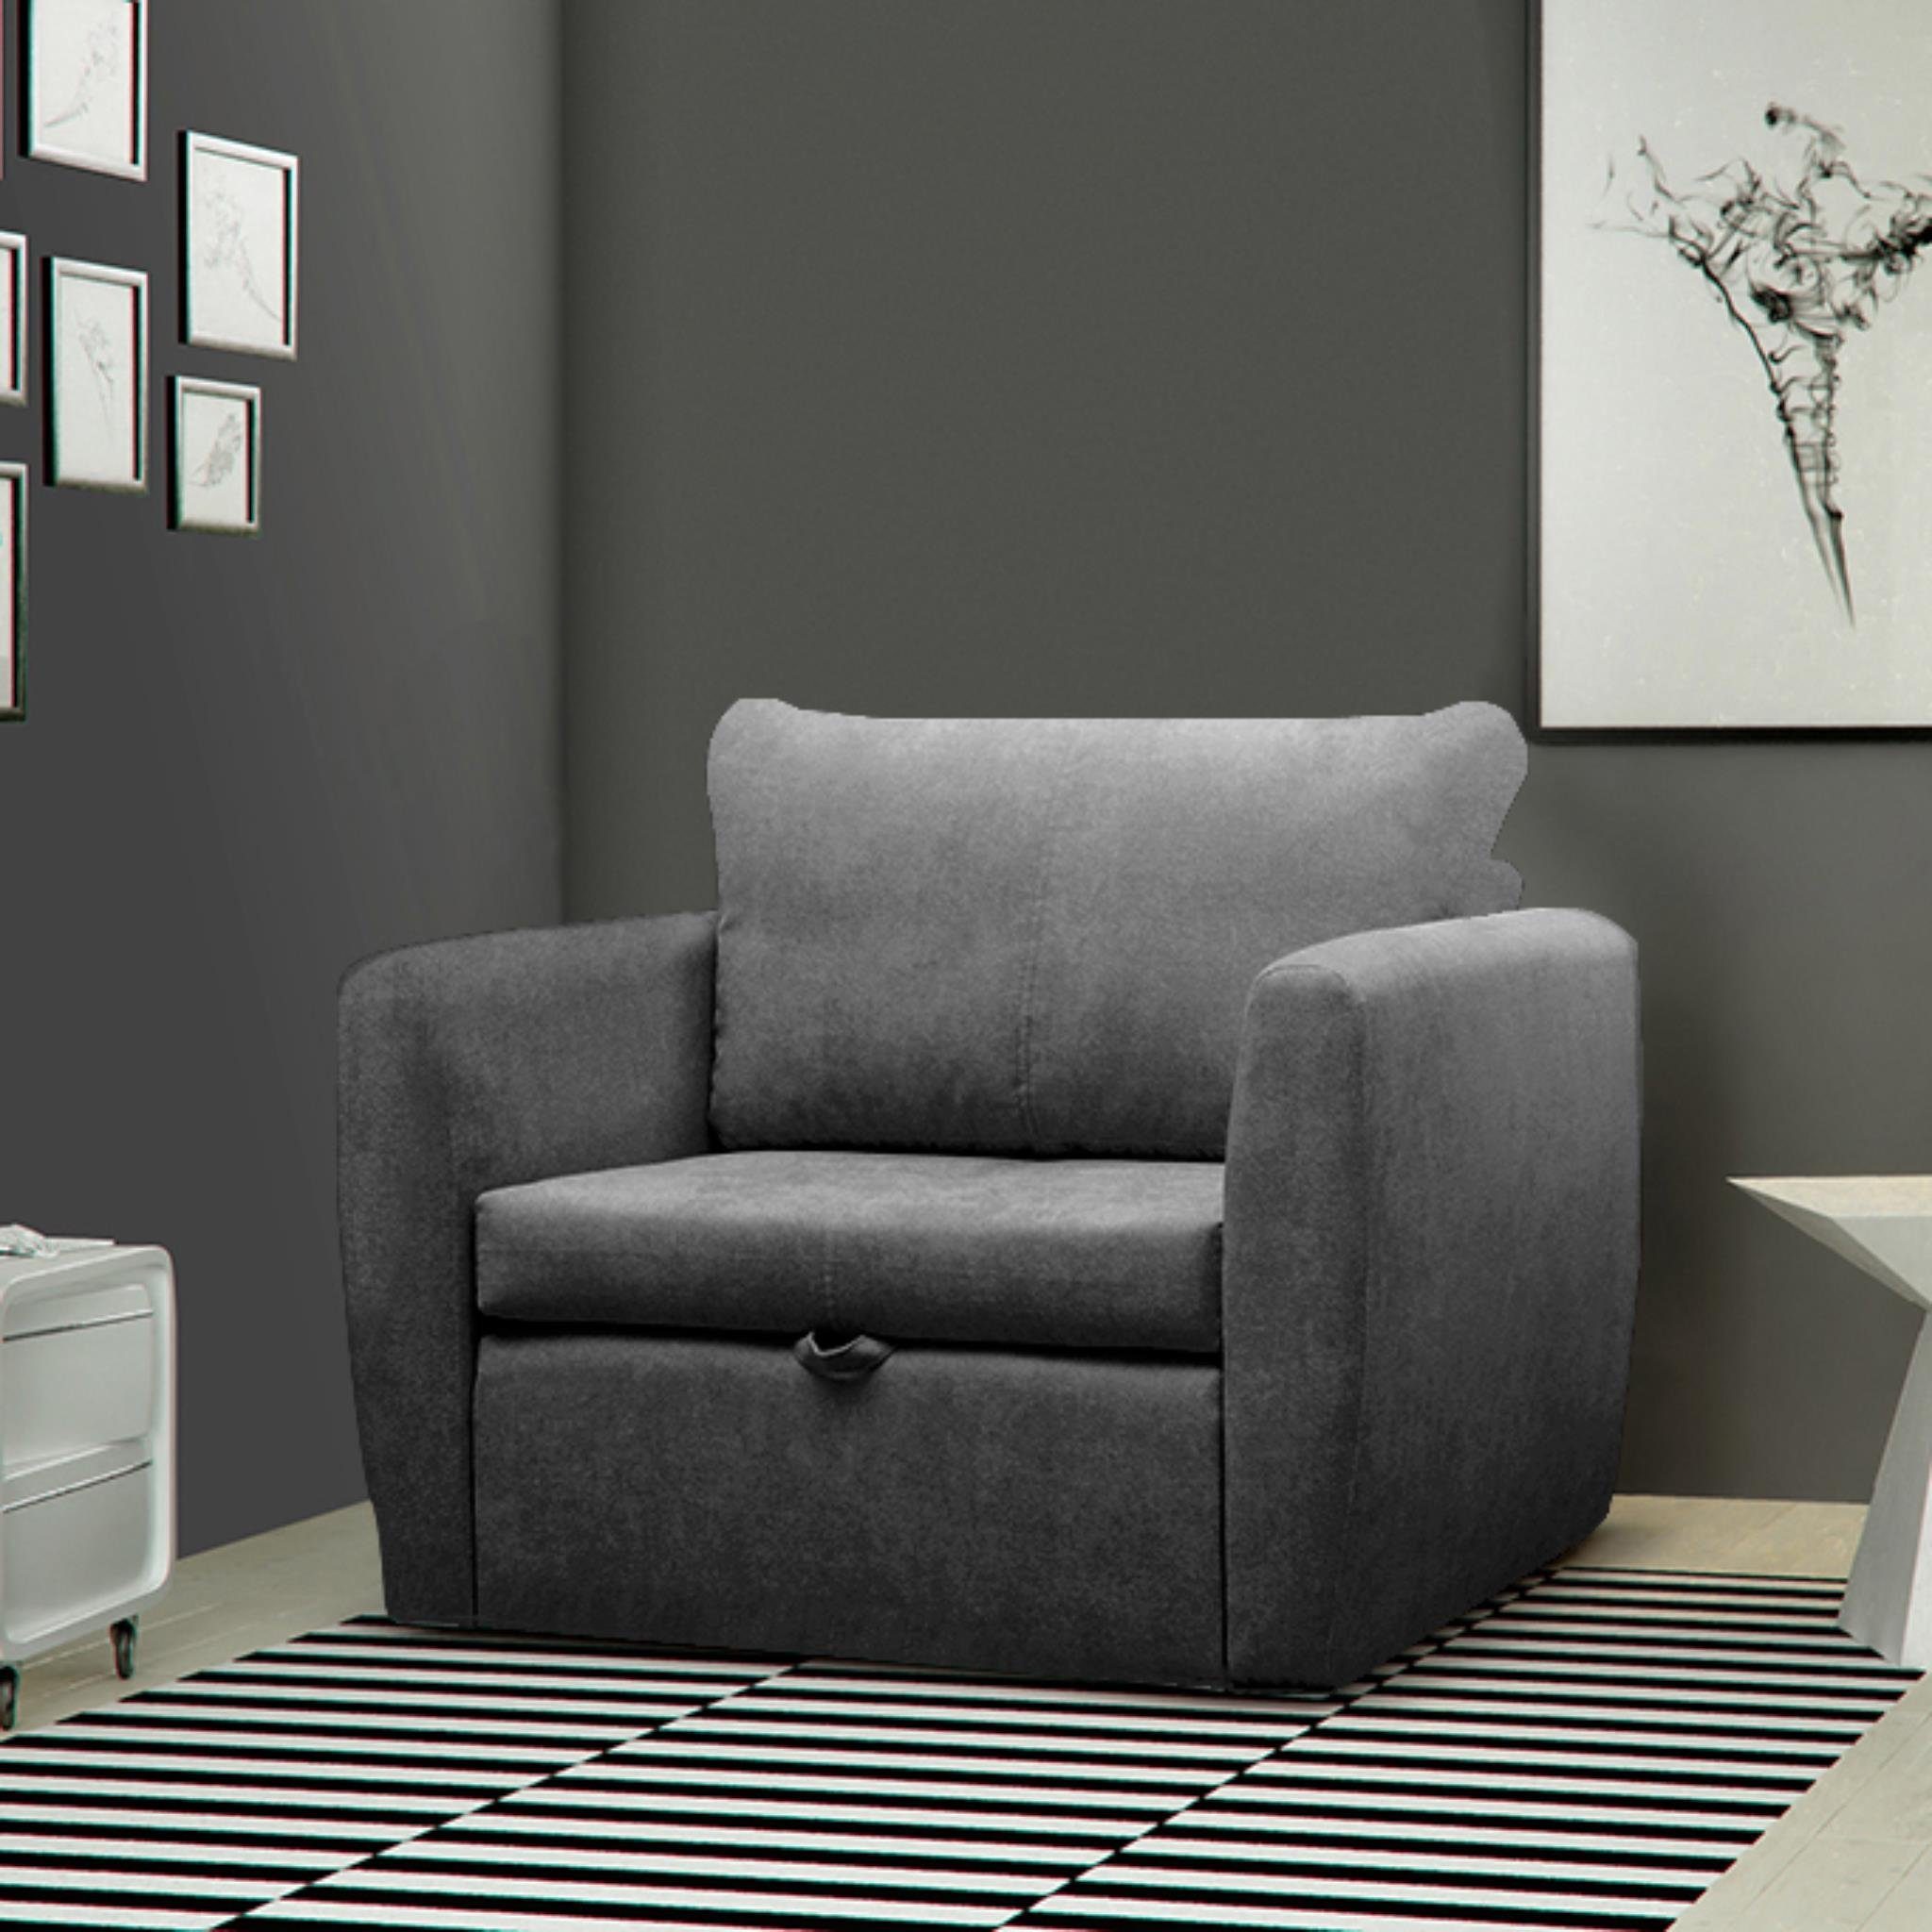 Beautysofa Relaxsessel Kamel (Modern 1-Sitzer Sofa, Wohnzimmersessel), mit Schlaffunktion, Bettkasten, Polstersessel Dunkelgrau (alfa 19)